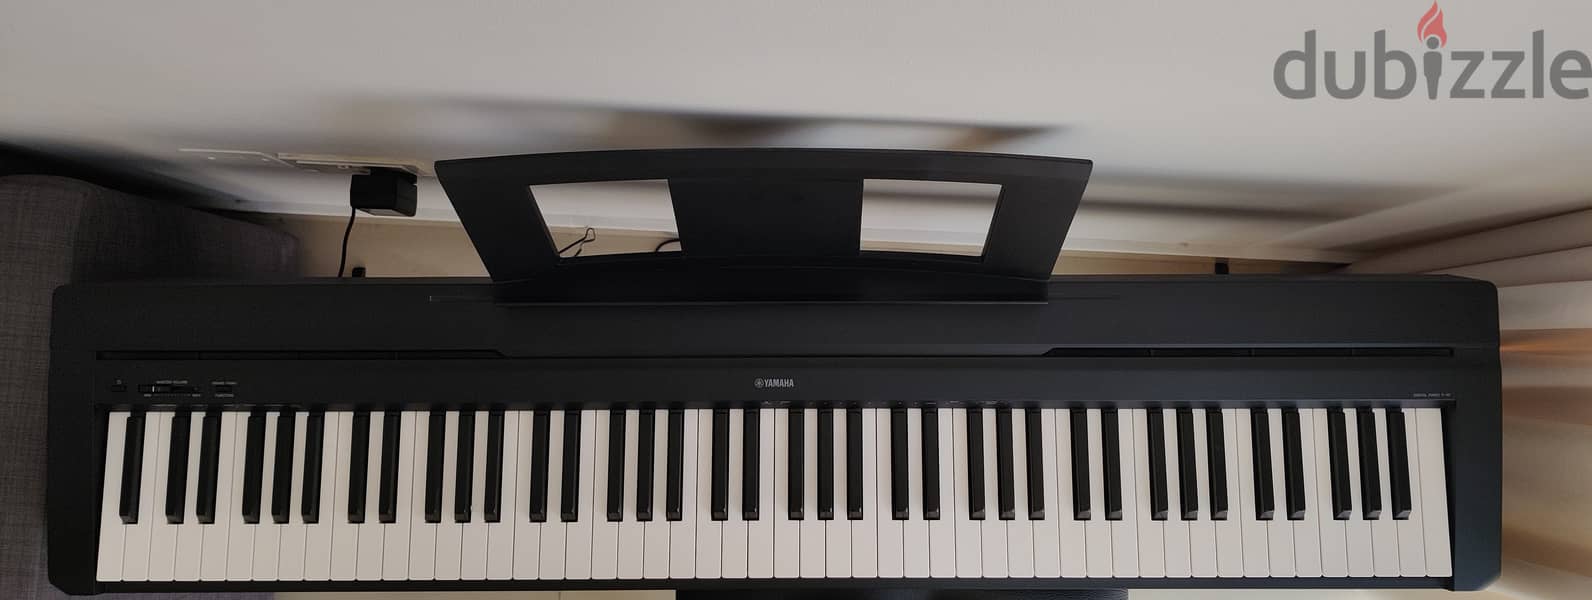 Pristine Yamaha P-45 Digital Piano Package (SOLD) 2